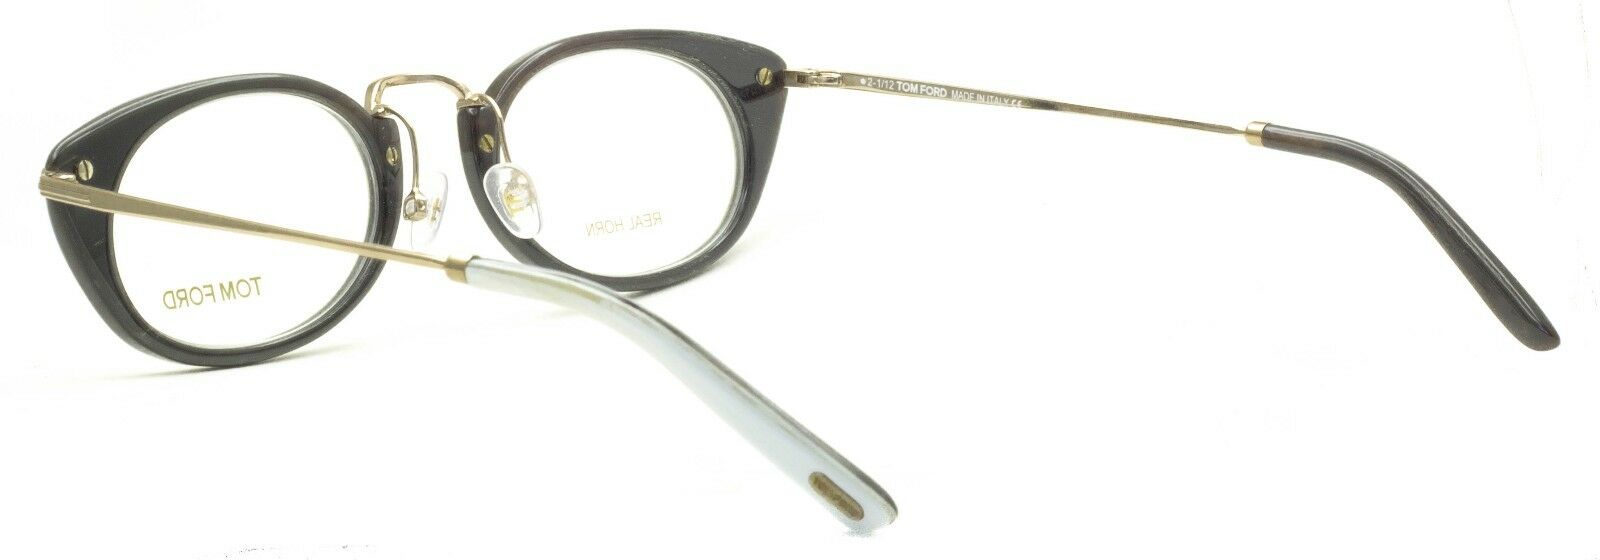 TOM FORD TF 5257 028 50mm Eyewear FRAMES RX Optical Eyeglasses Glasses New Italy